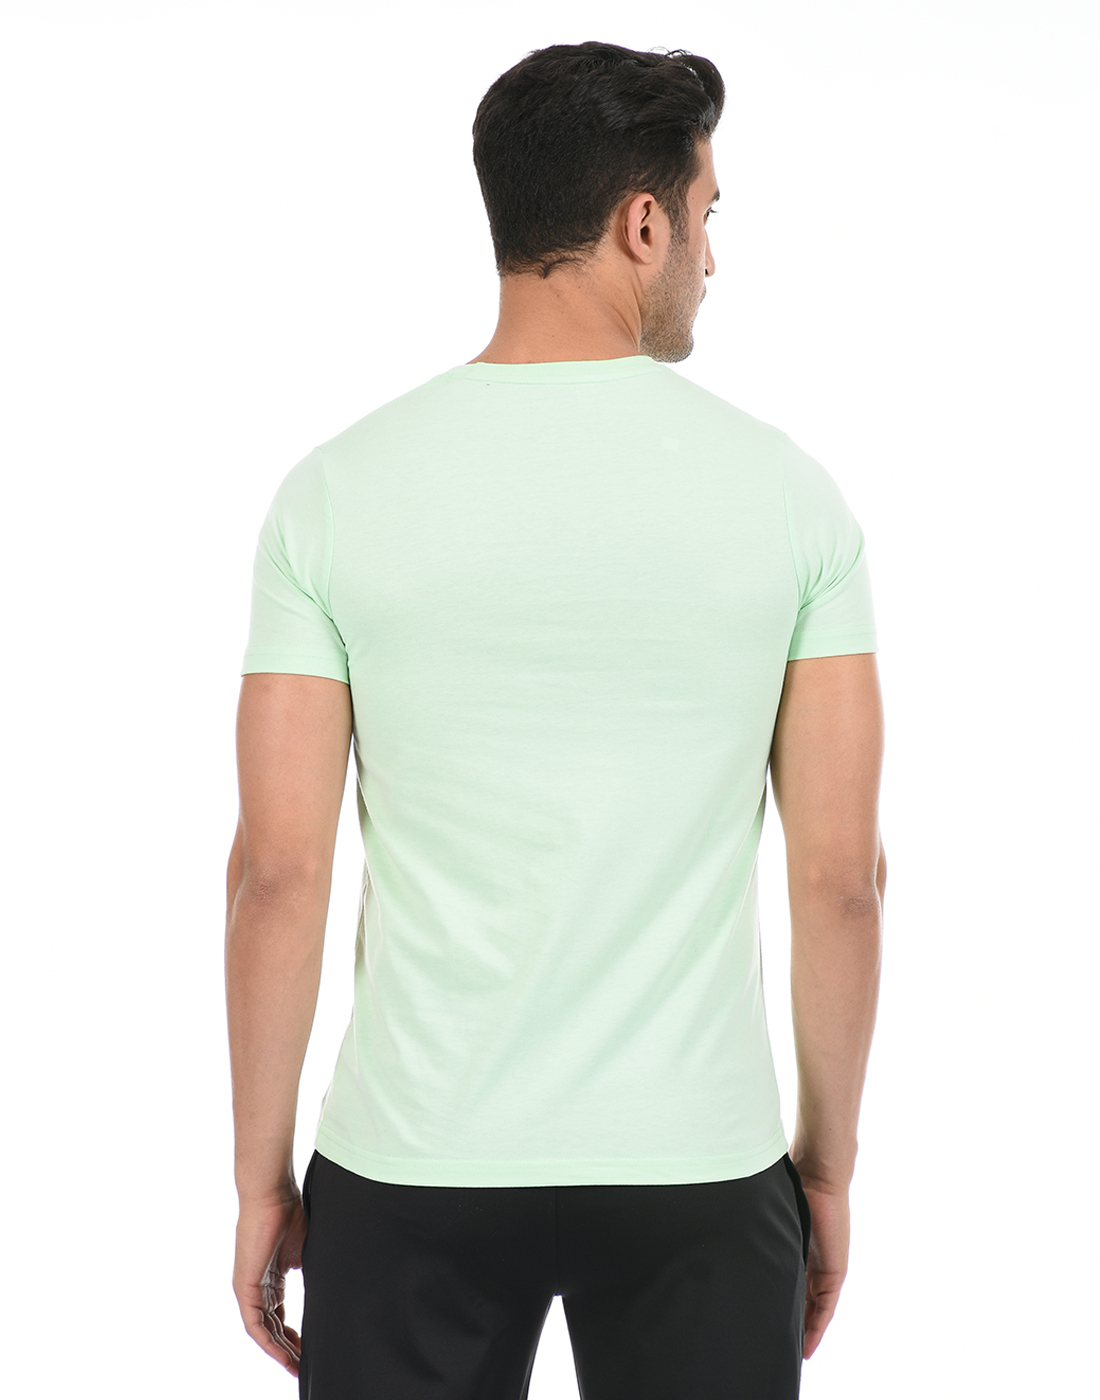 Cloak & Decker by Monte Carlo Men Solid Light Green T-Shirt